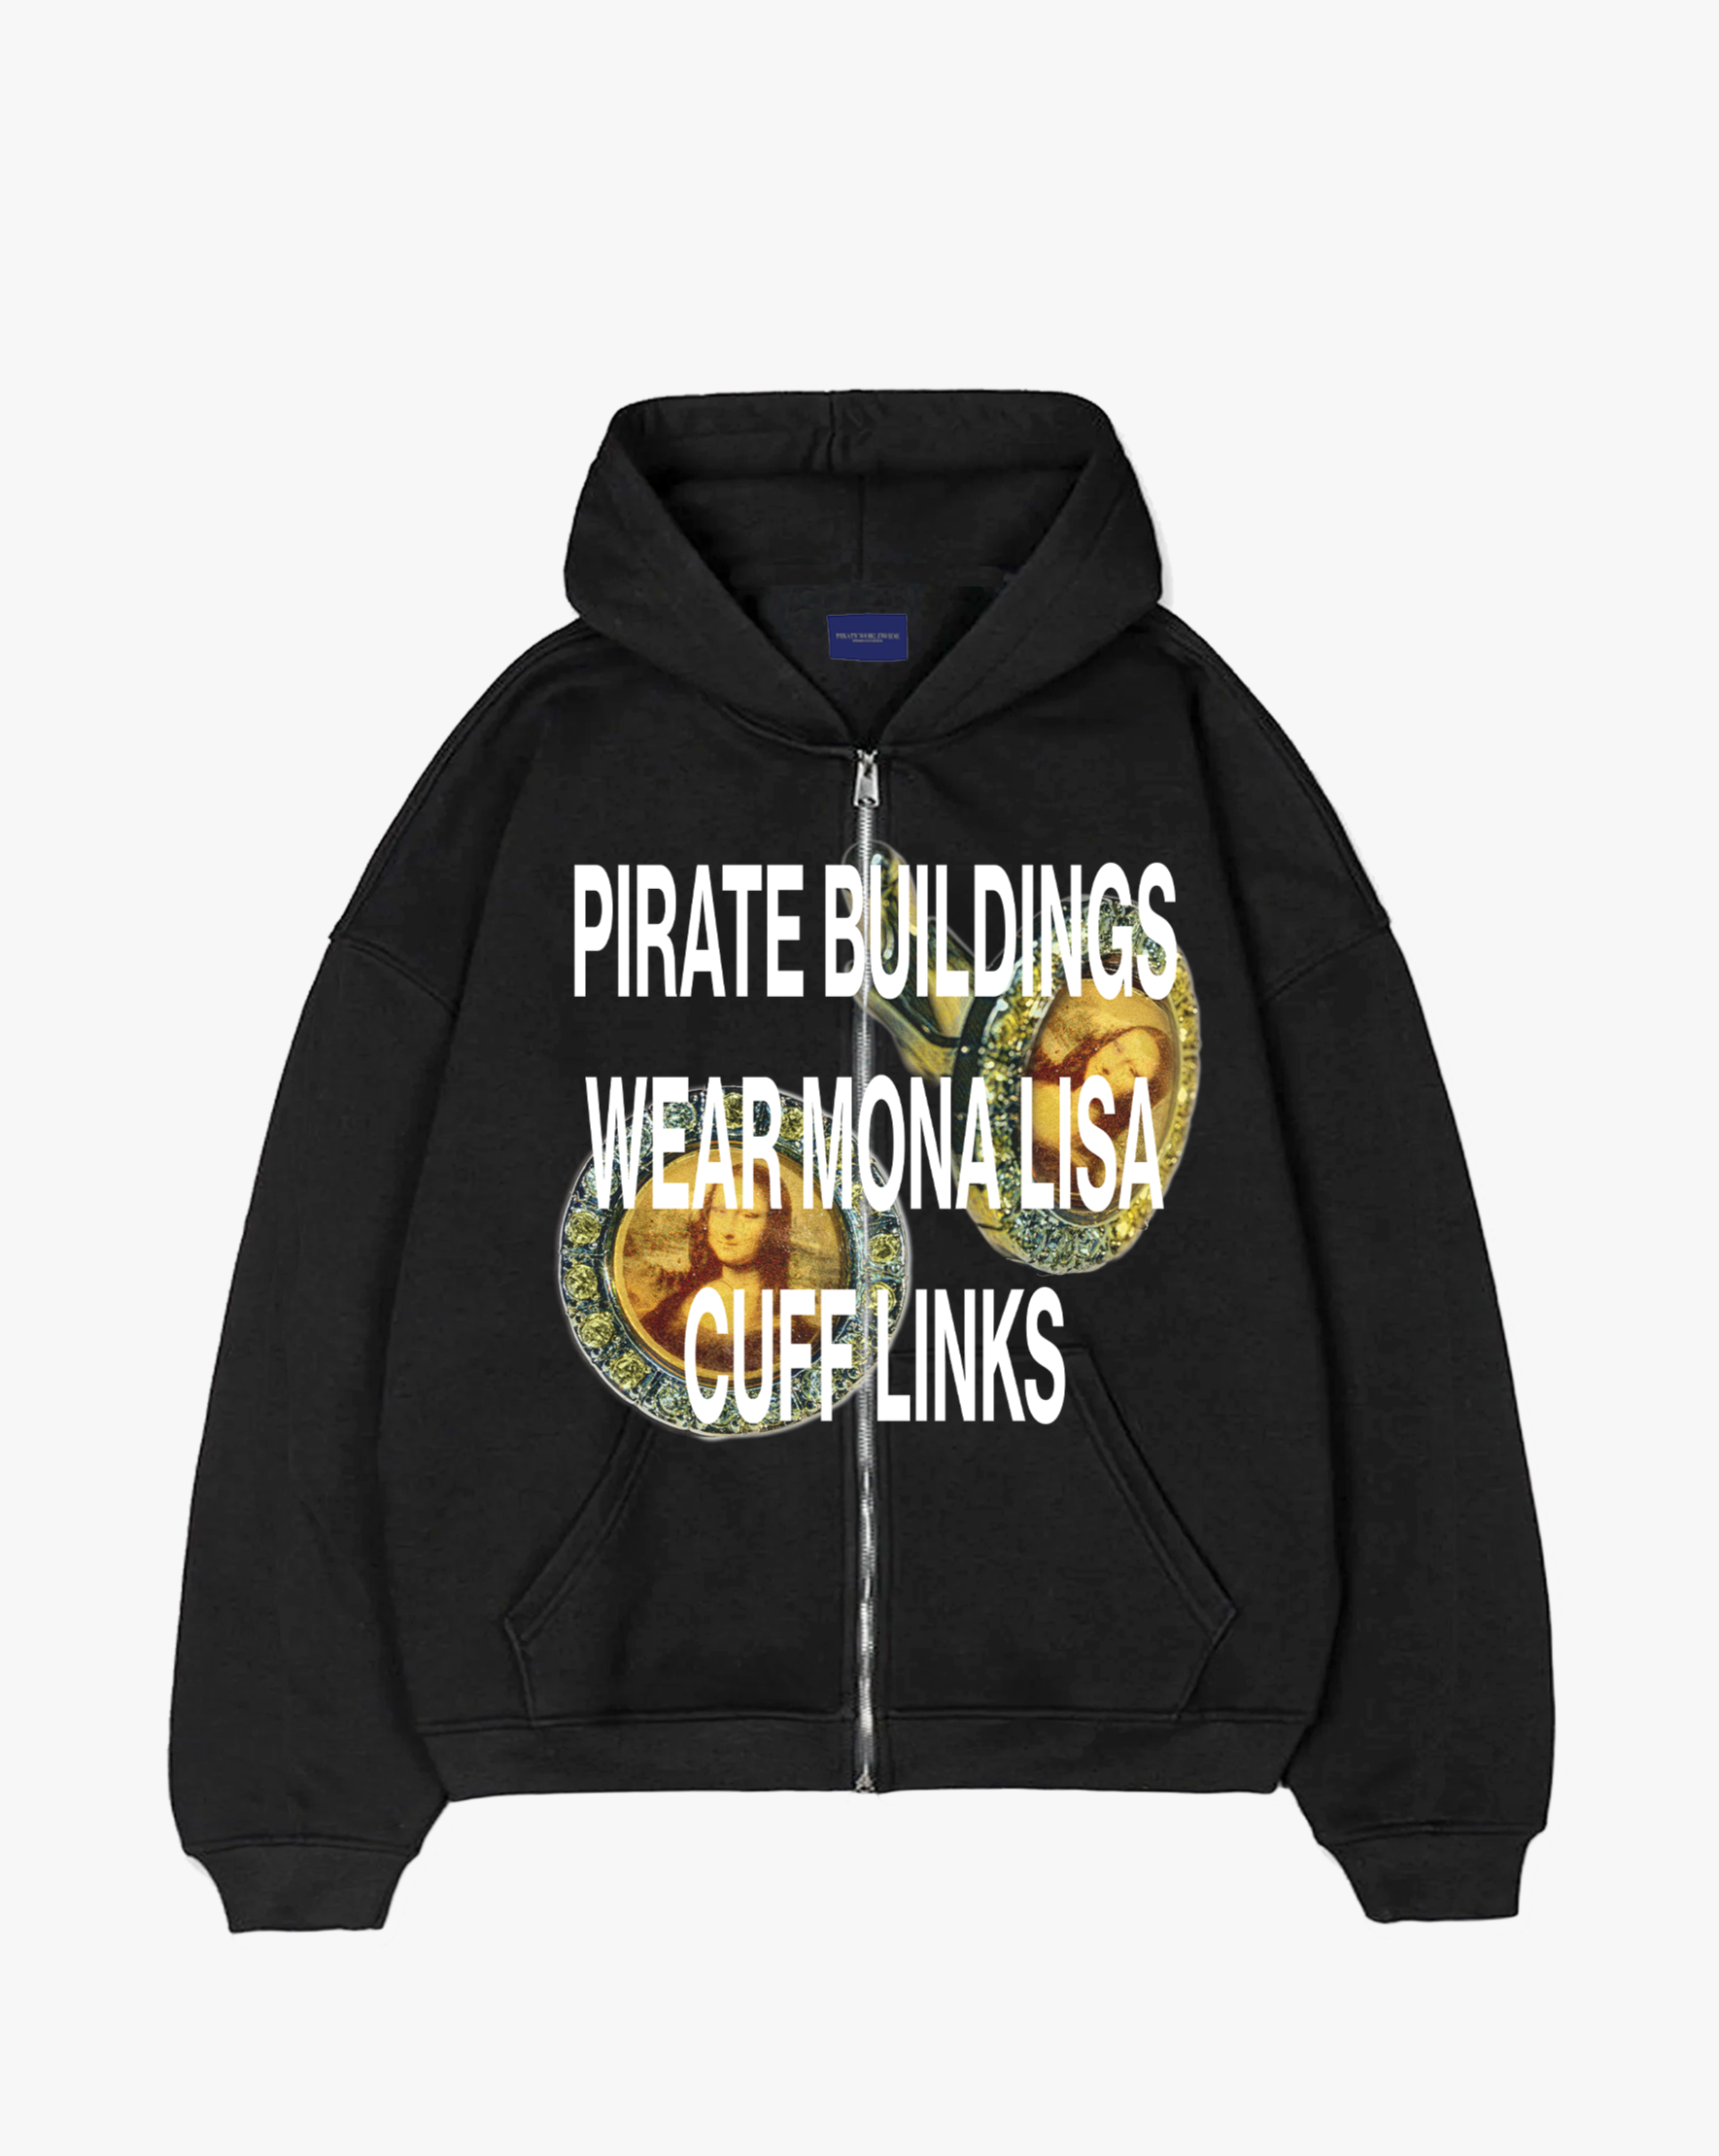 Pirate Cuff Links Zip-Up Hoodie (Black)